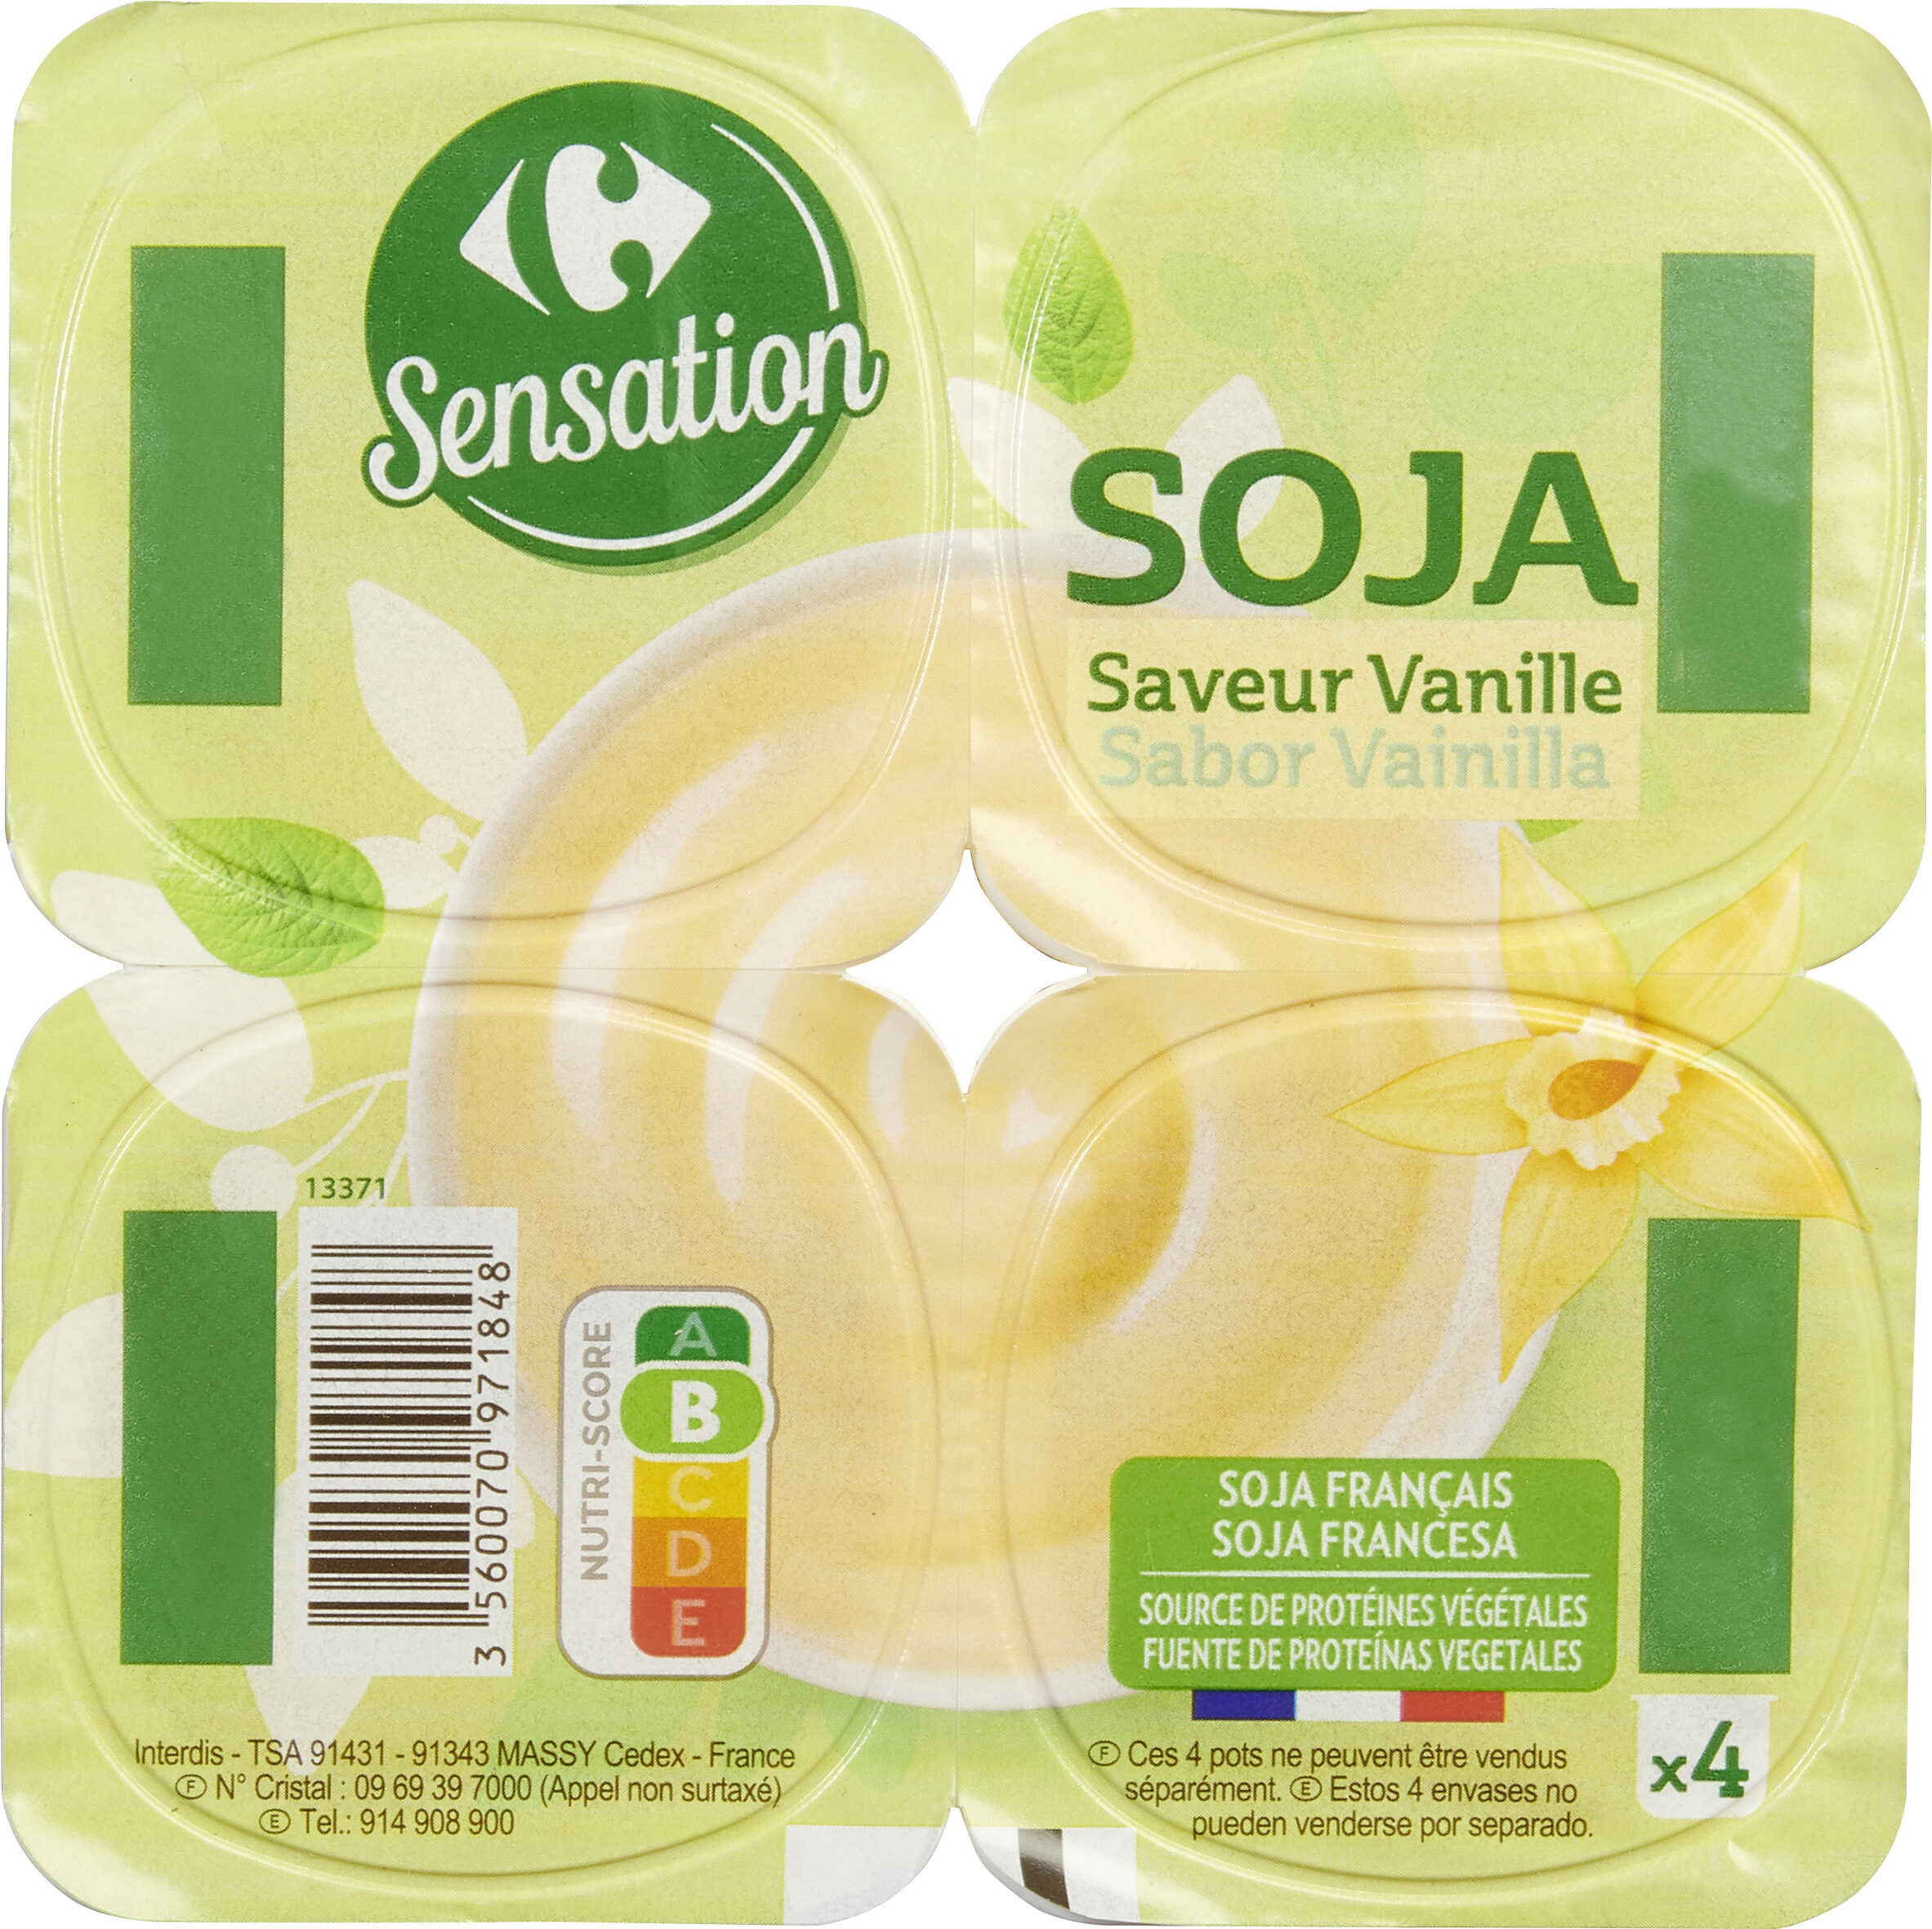 SOJA saveur Vanille - Producto - fr